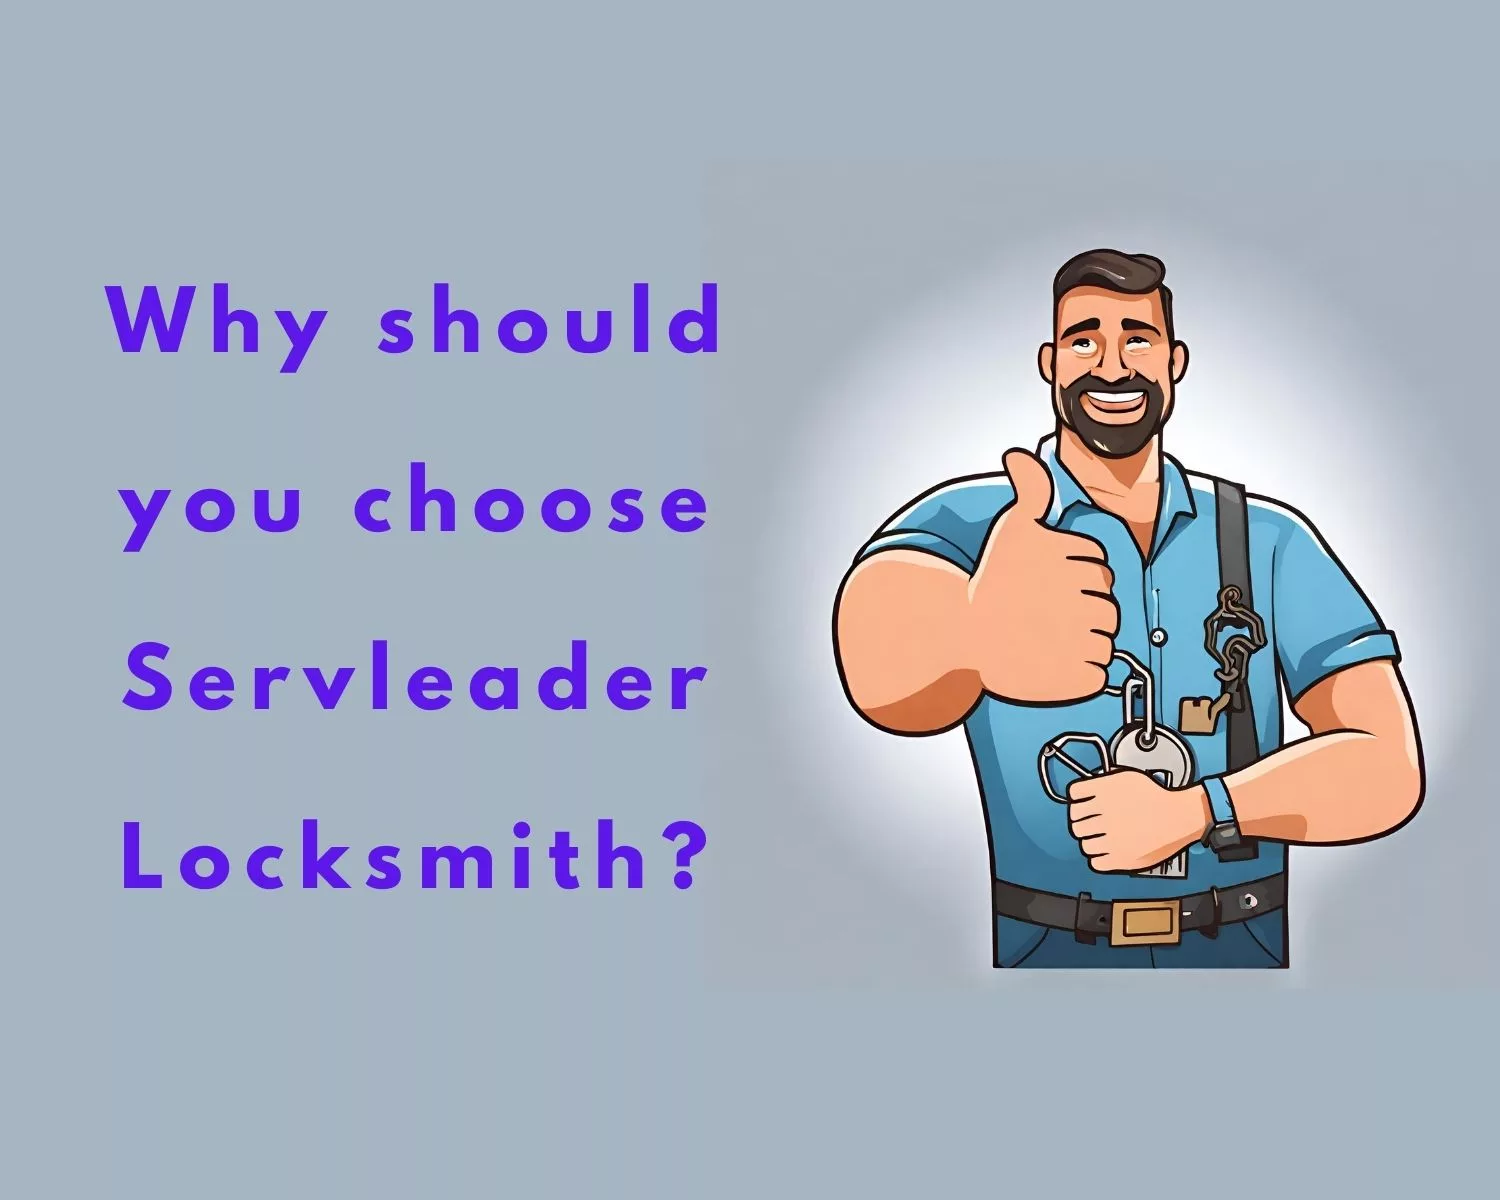 Why should you choose Servleader Locksmith?